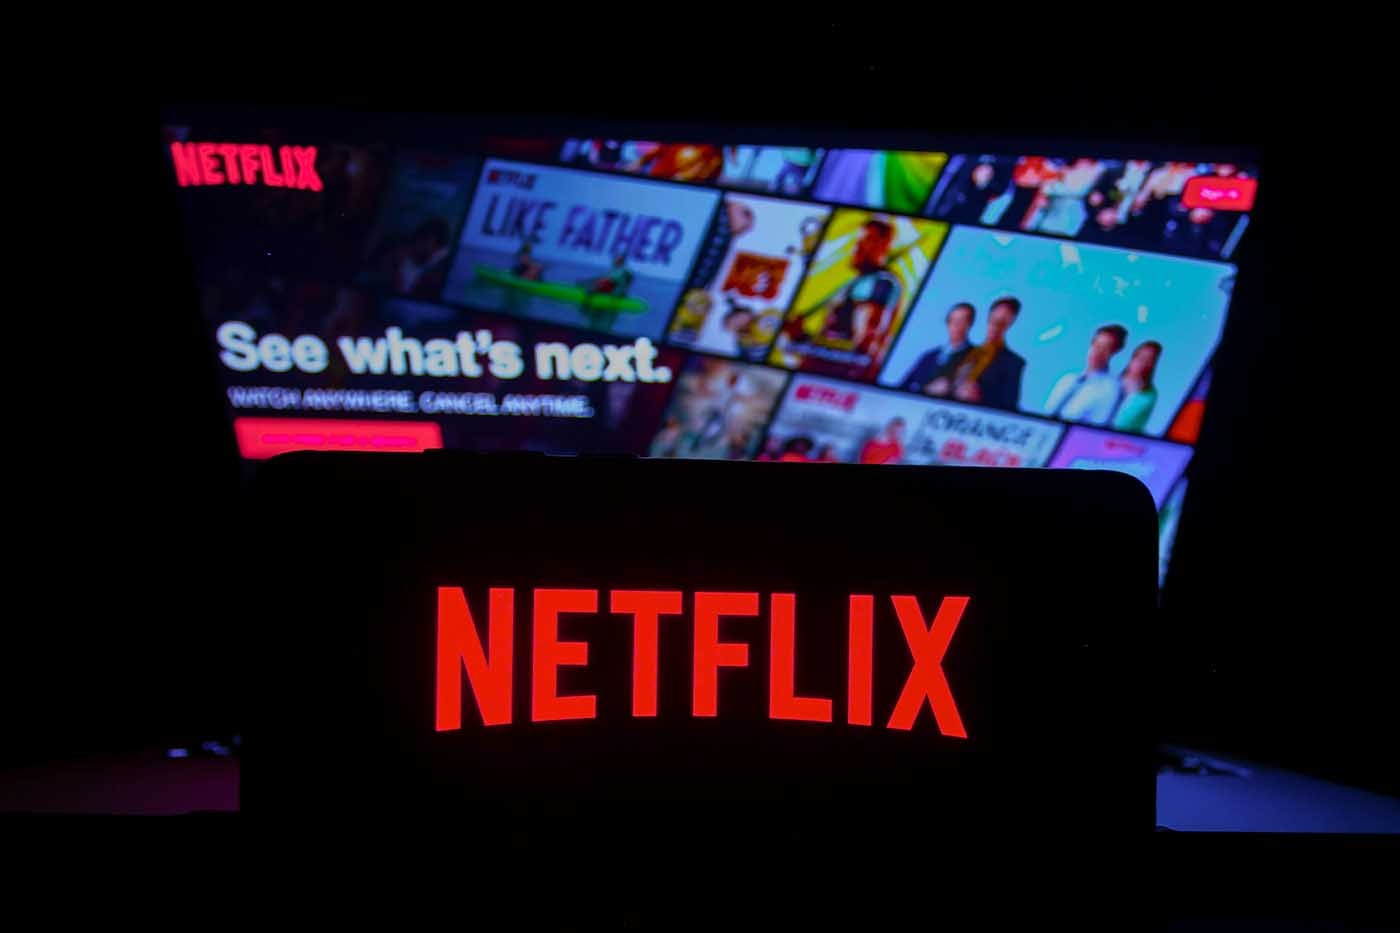 Netflix on X: THE SUPER MARIO BROS. MOVIE IS NOW ON NETFLIX https